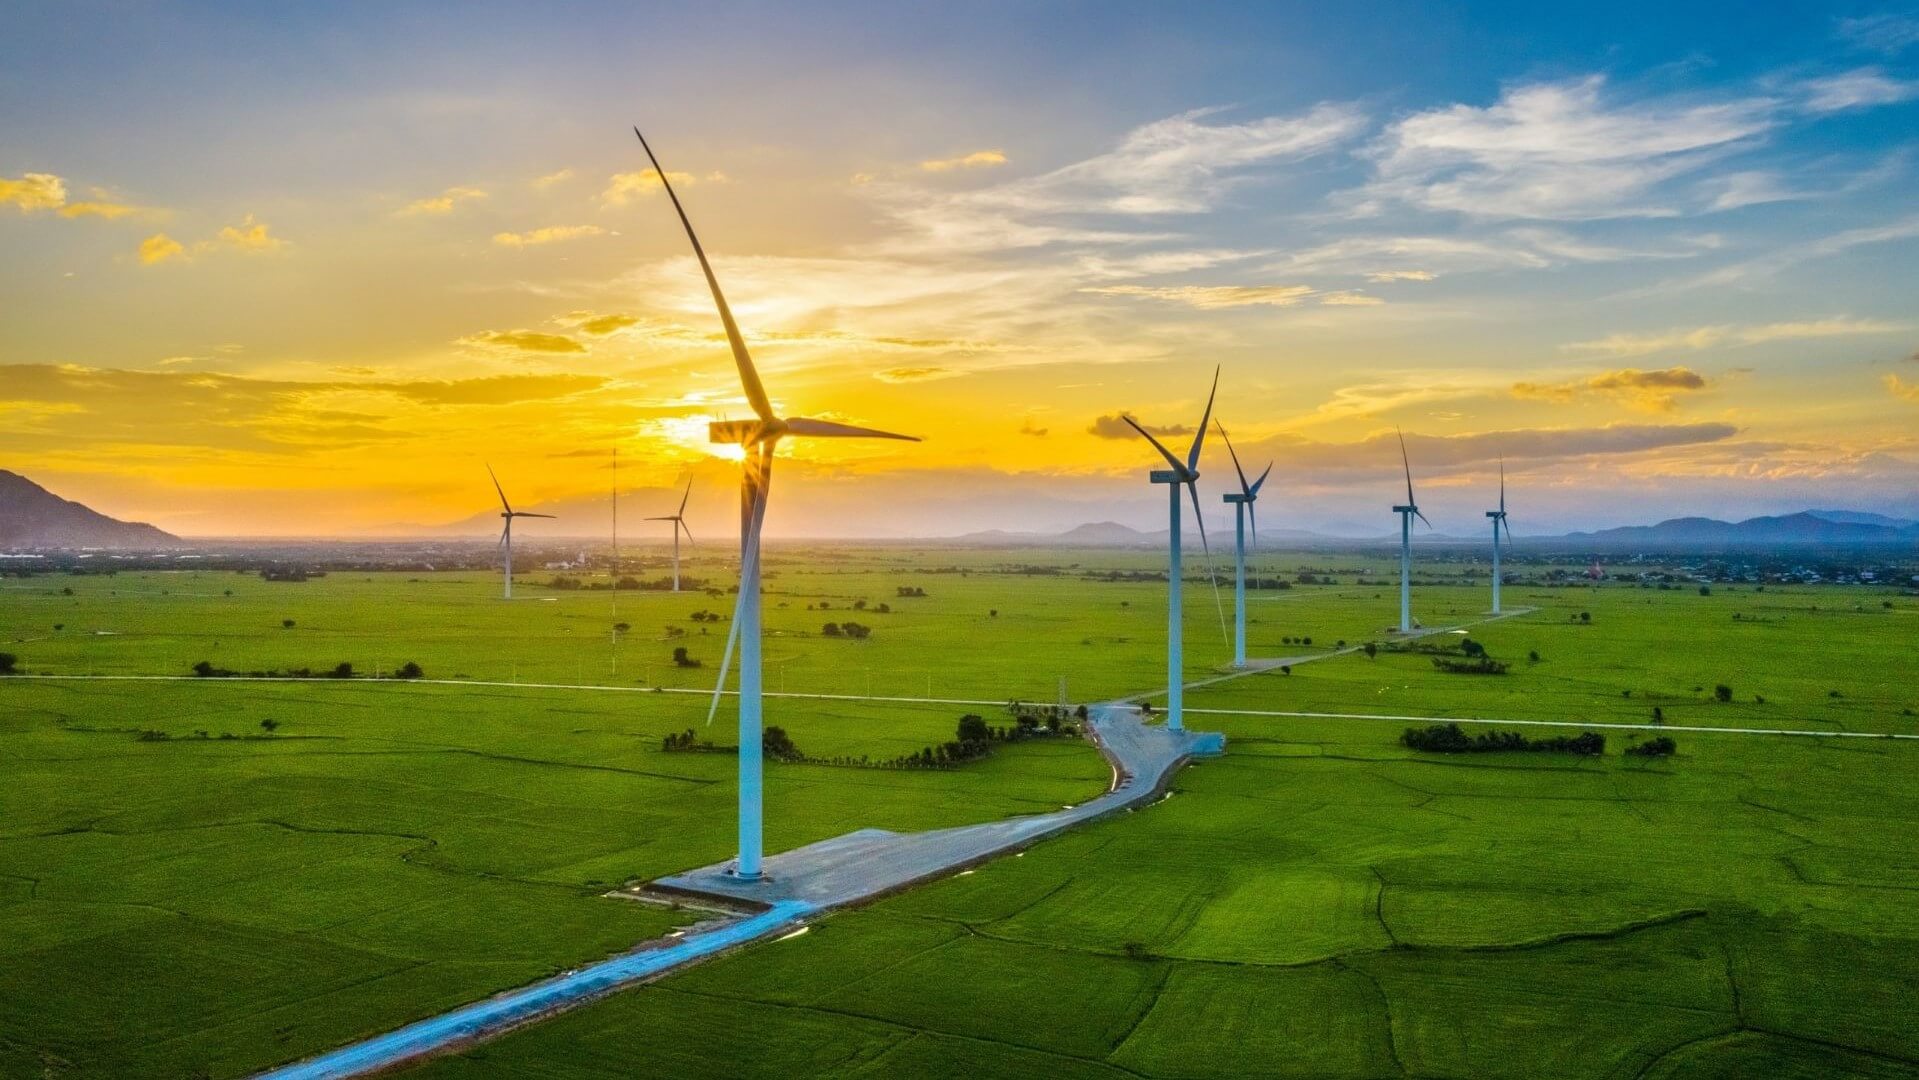 Wind turbines in a field in Vietnam at sunset